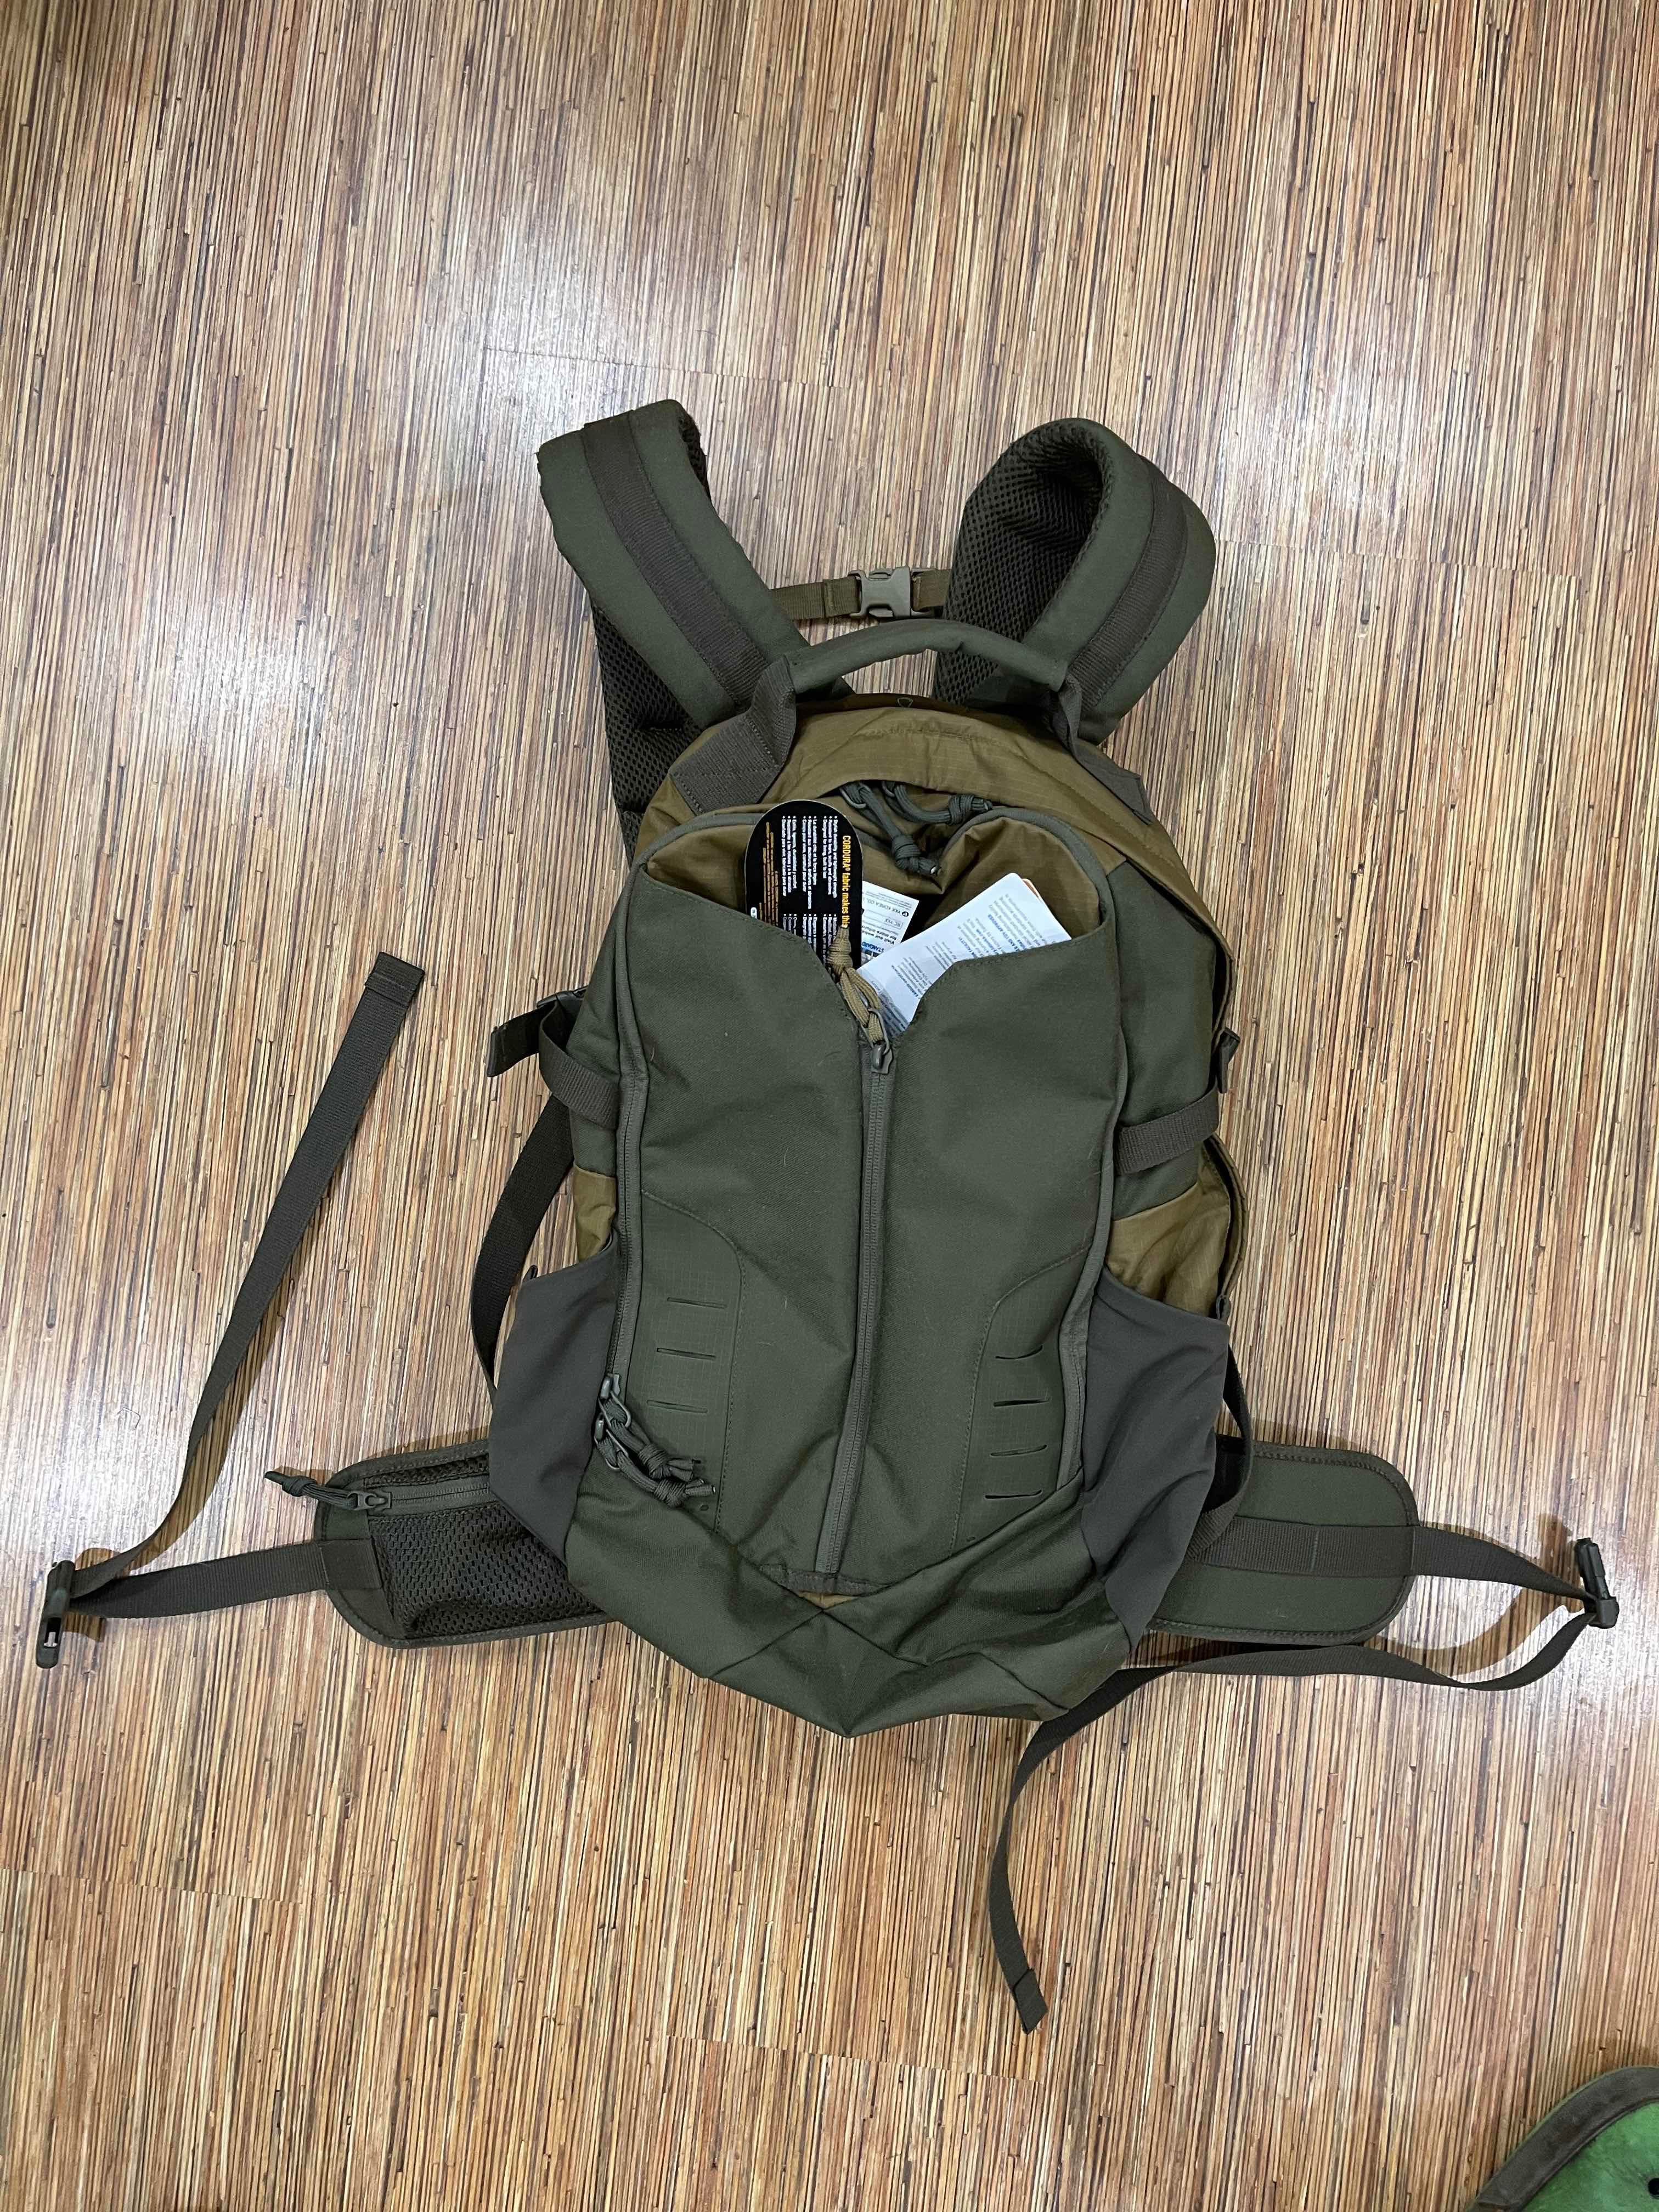 Новый рюкзак Tasmanian Tiger Tac Pack 22 Olive/ Coyote + Raincover.